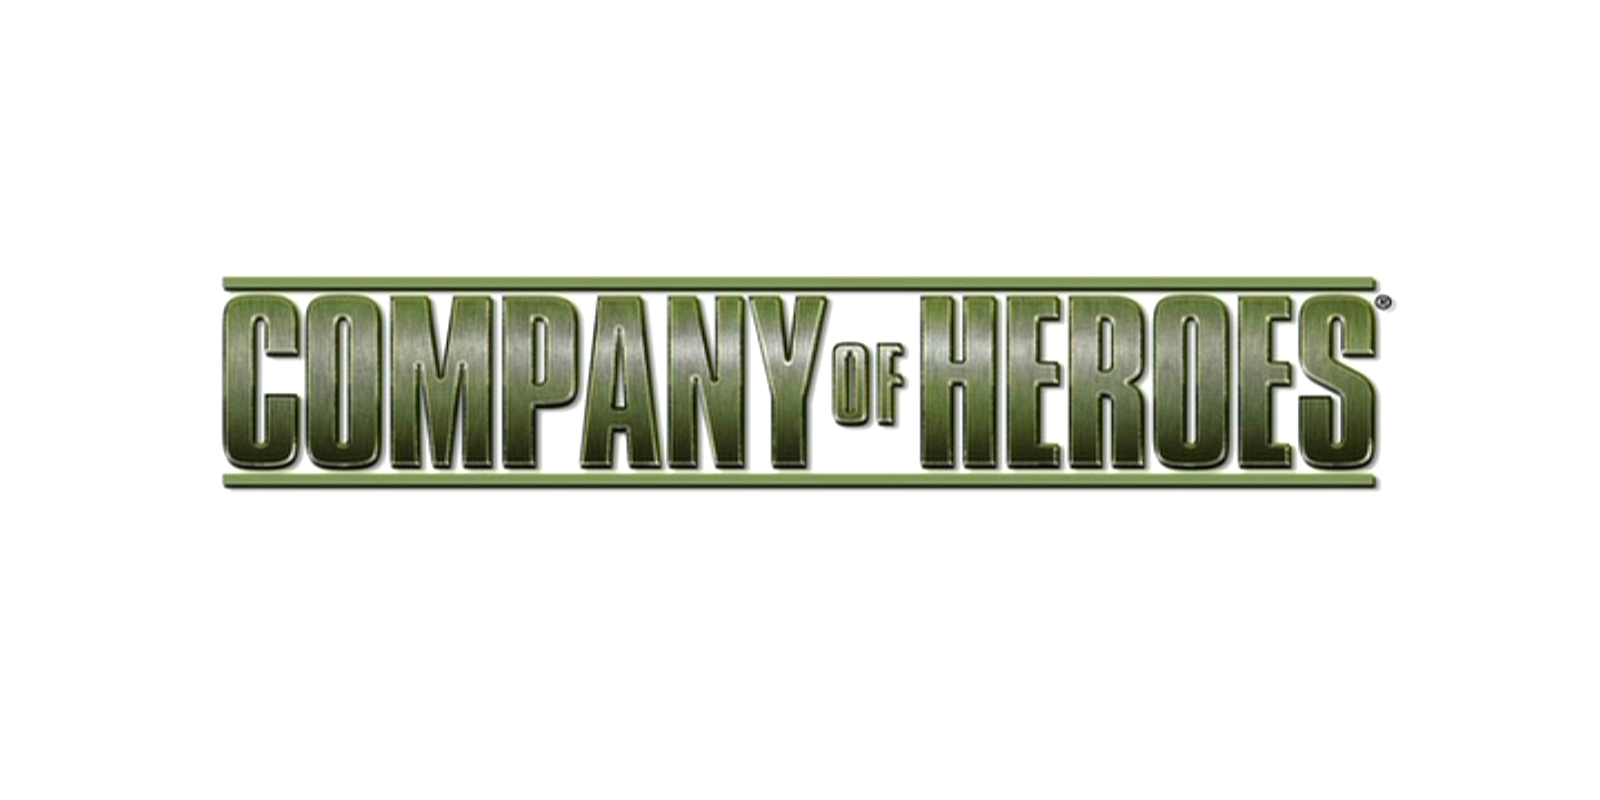 Movie Company Of Heroes 1600x800